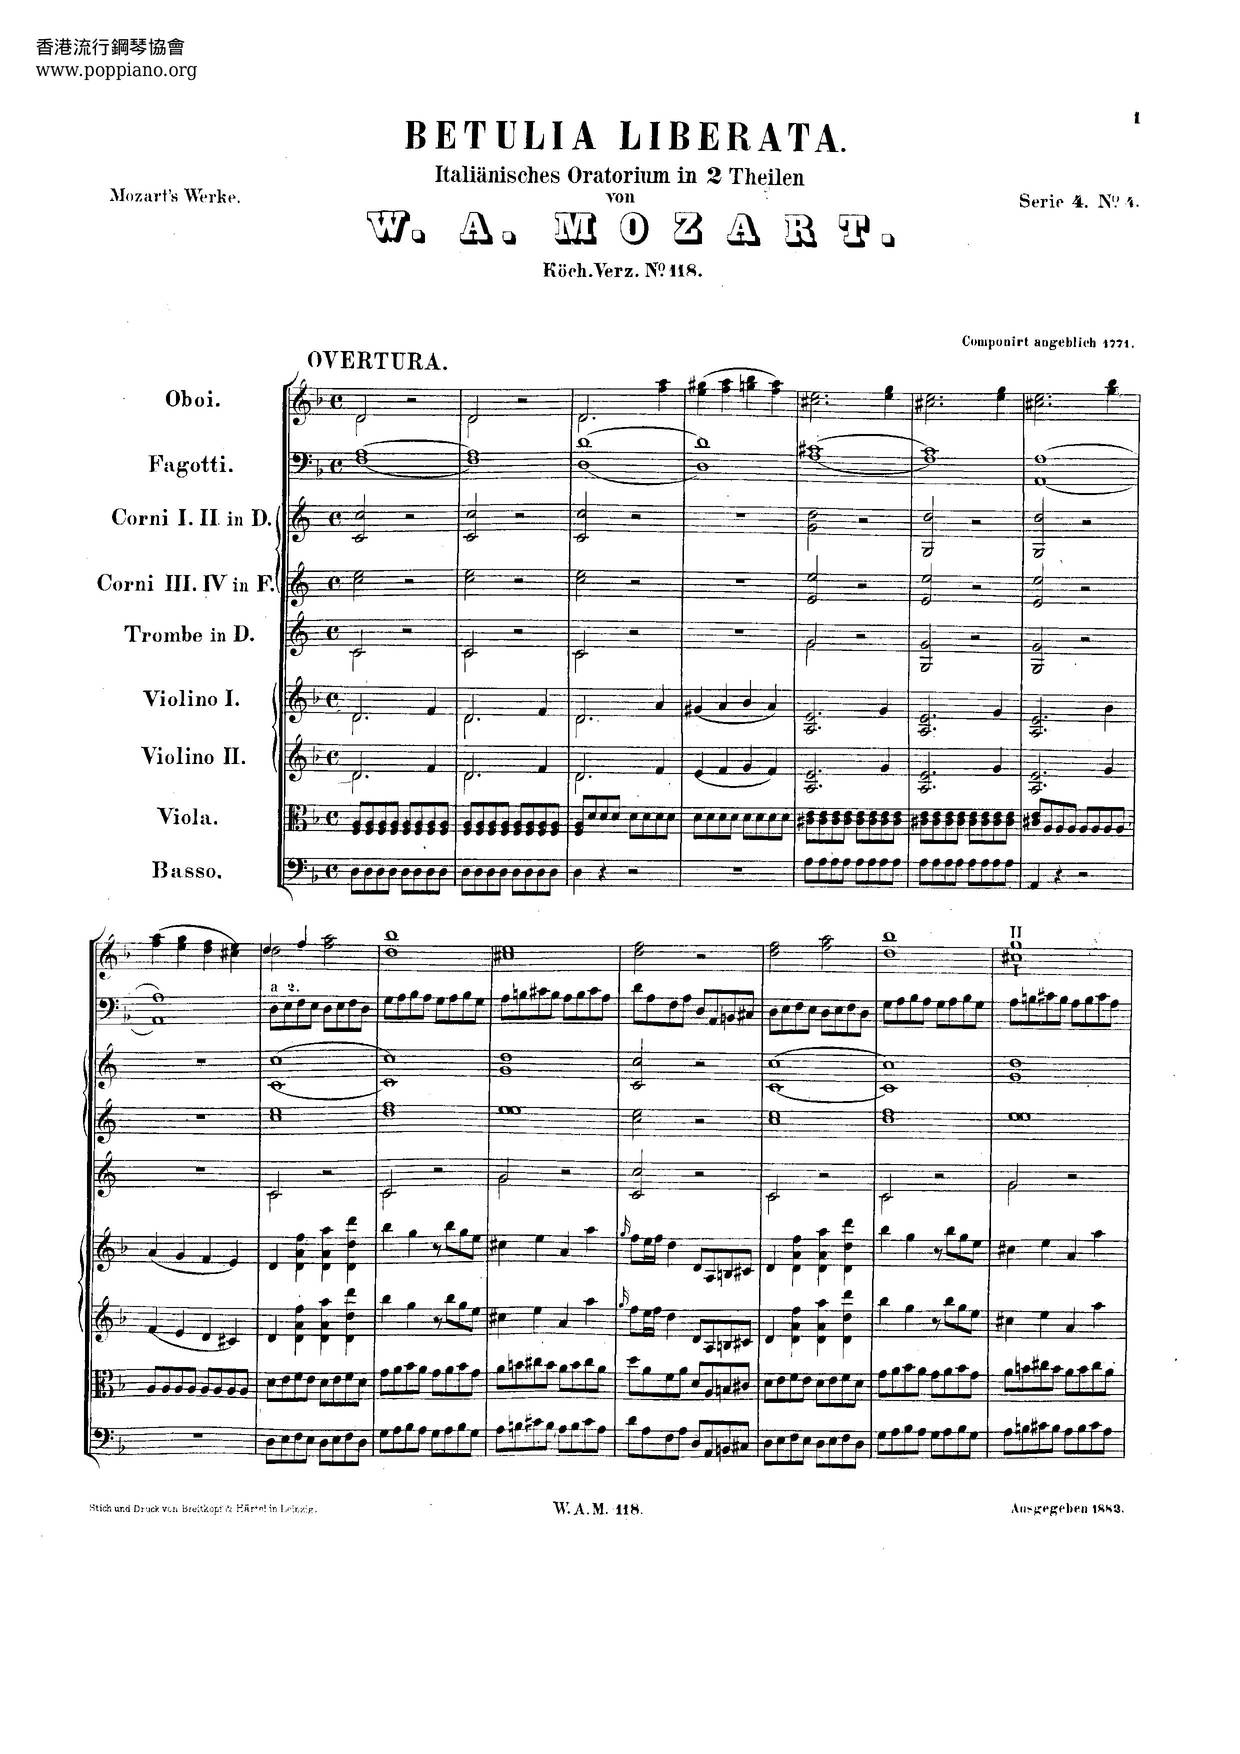 La Betulia Liberata, K. 118/74Cピアノ譜